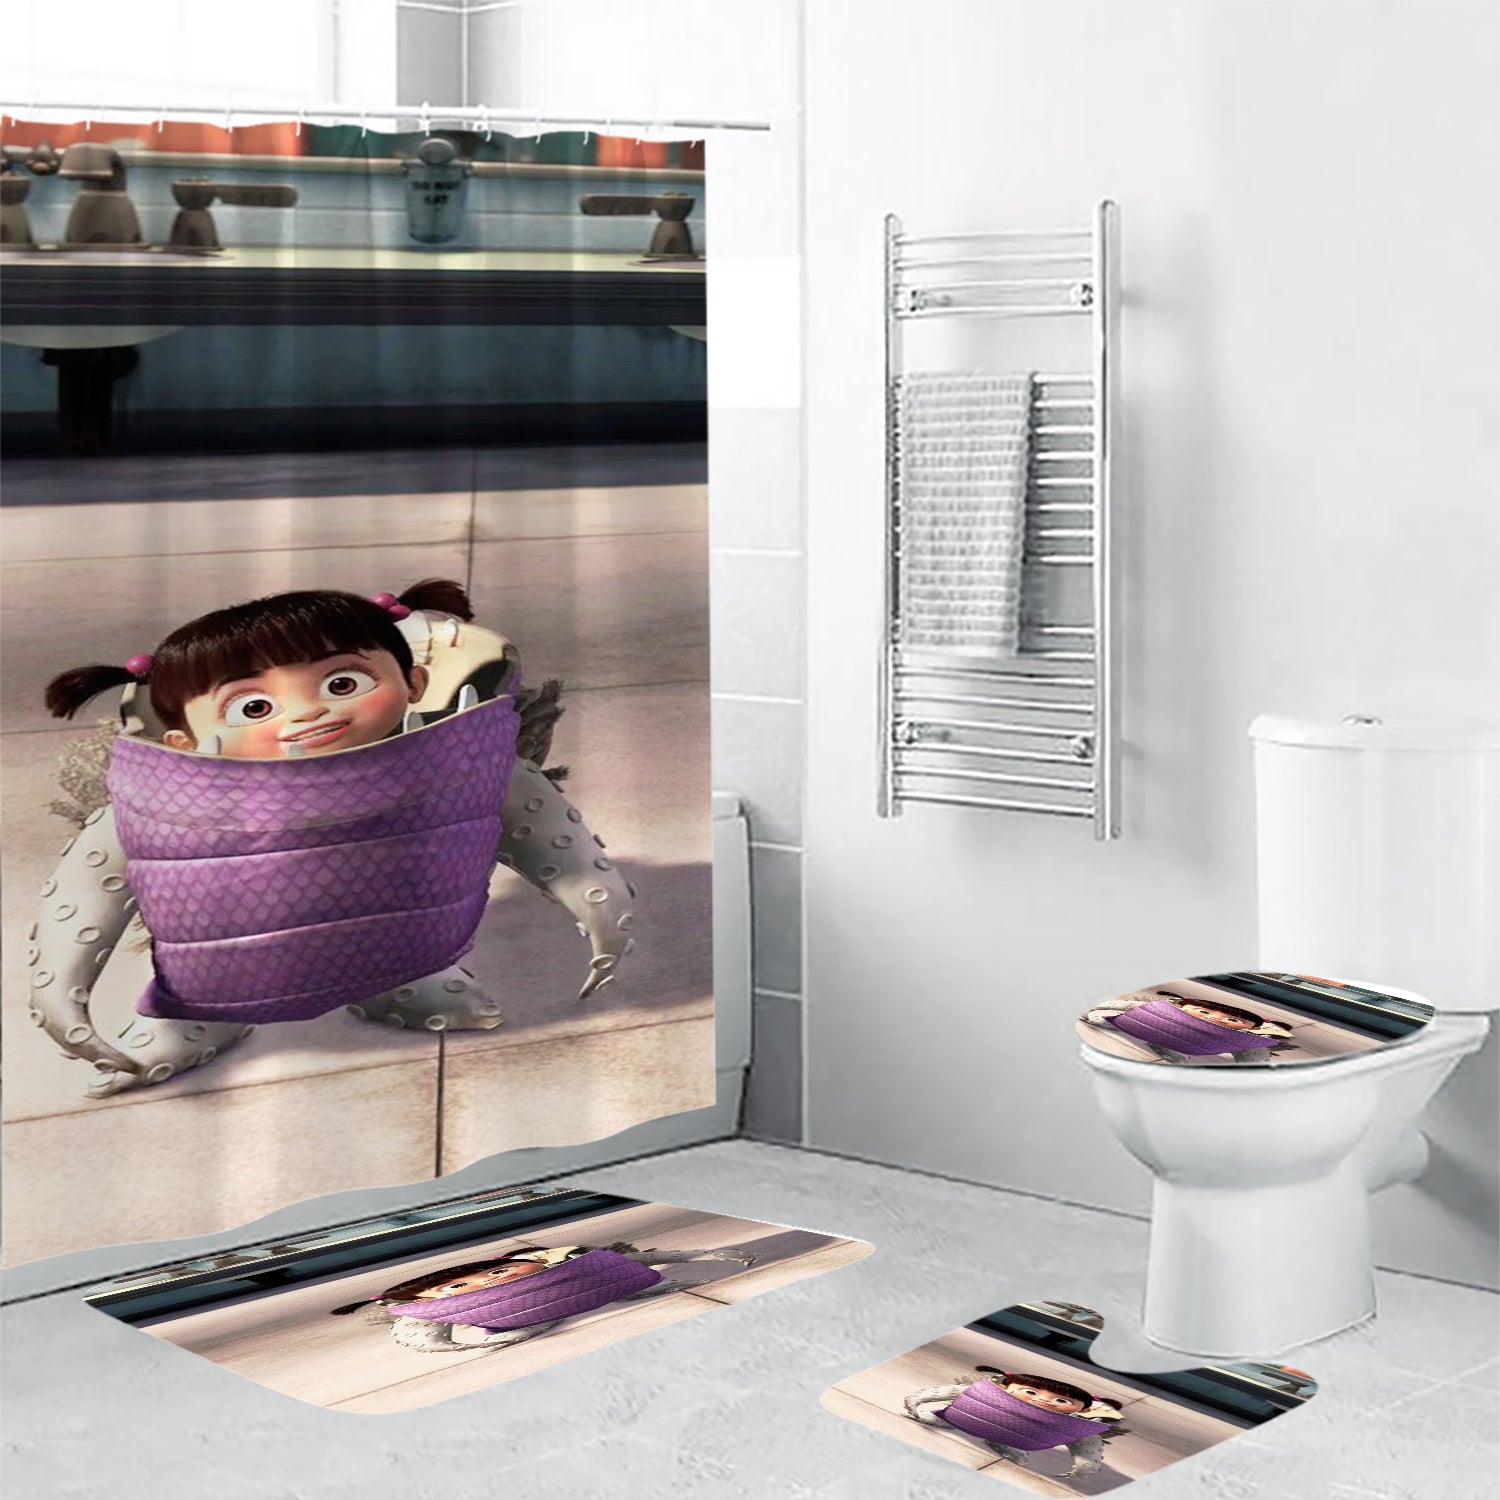 Characters Boo v2 Monsters Inc Monsters University Movie Disney Pixar Waterproof Shower Curtain Non-Slip Toilet Lid Cover Bath Mat - Bathroom Set